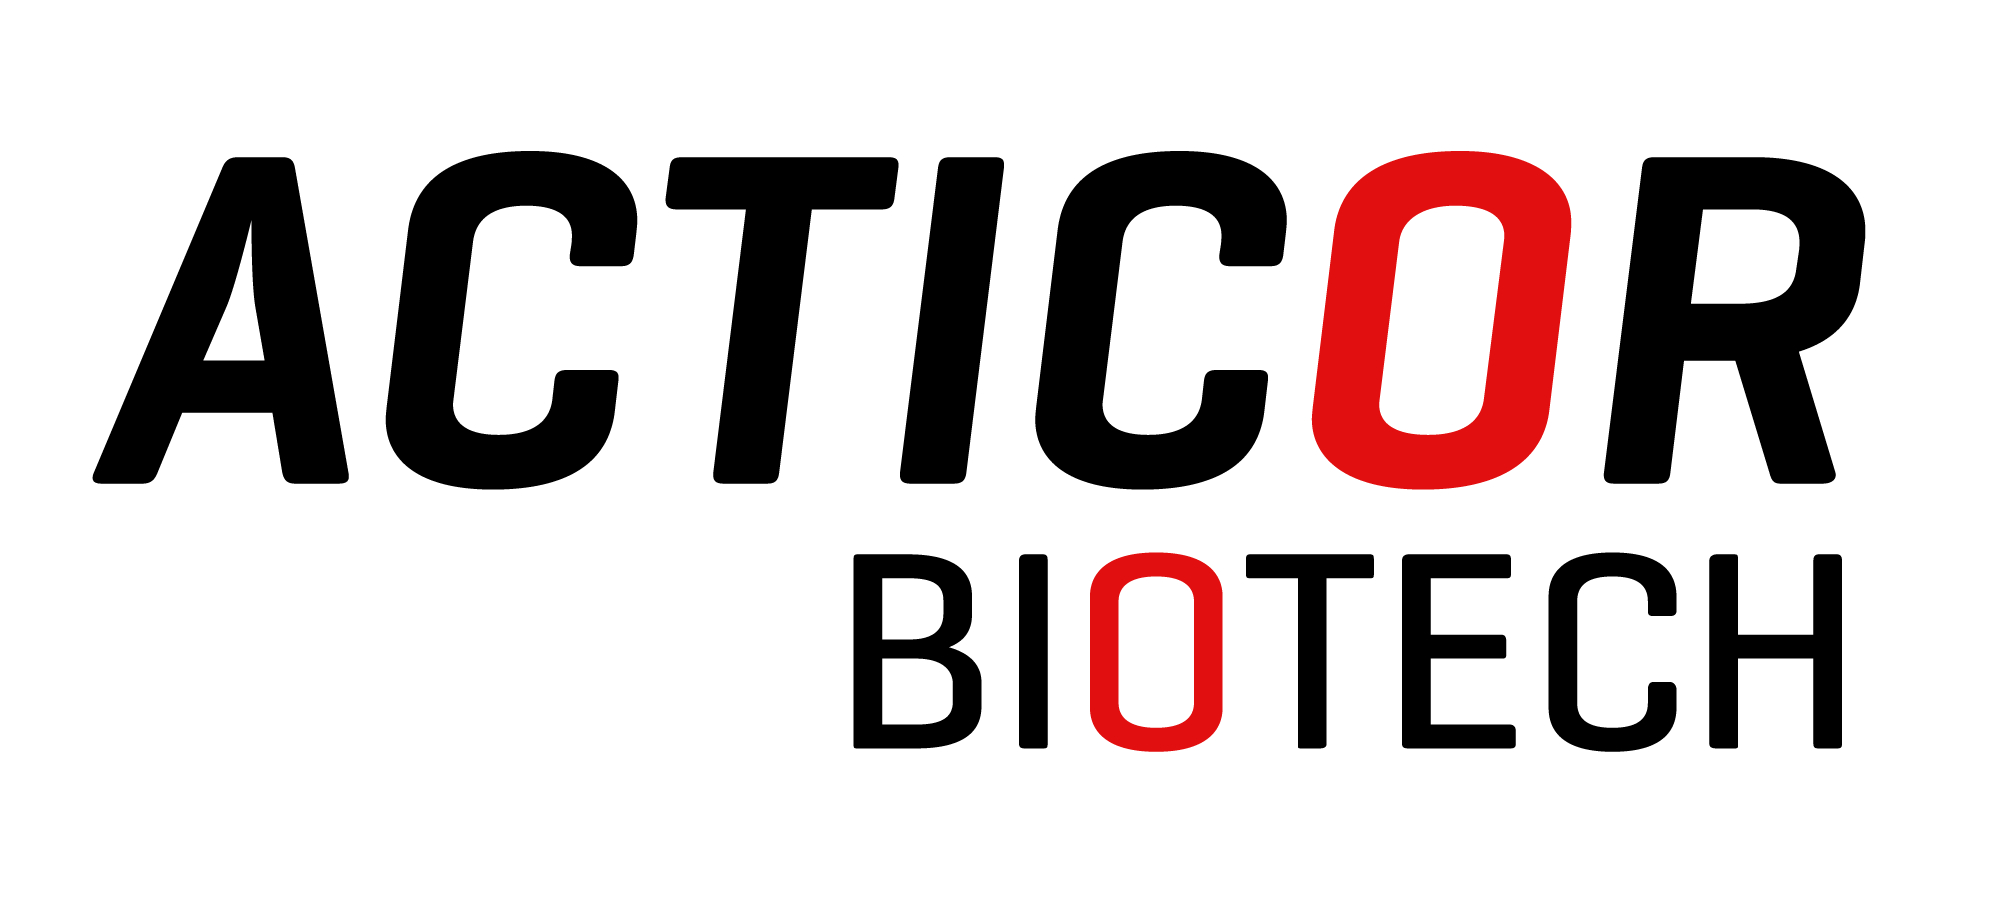 https://mms.businesswire.com/media/20220330005534/en/1304115/5/Acticor_Biotech.jpg 